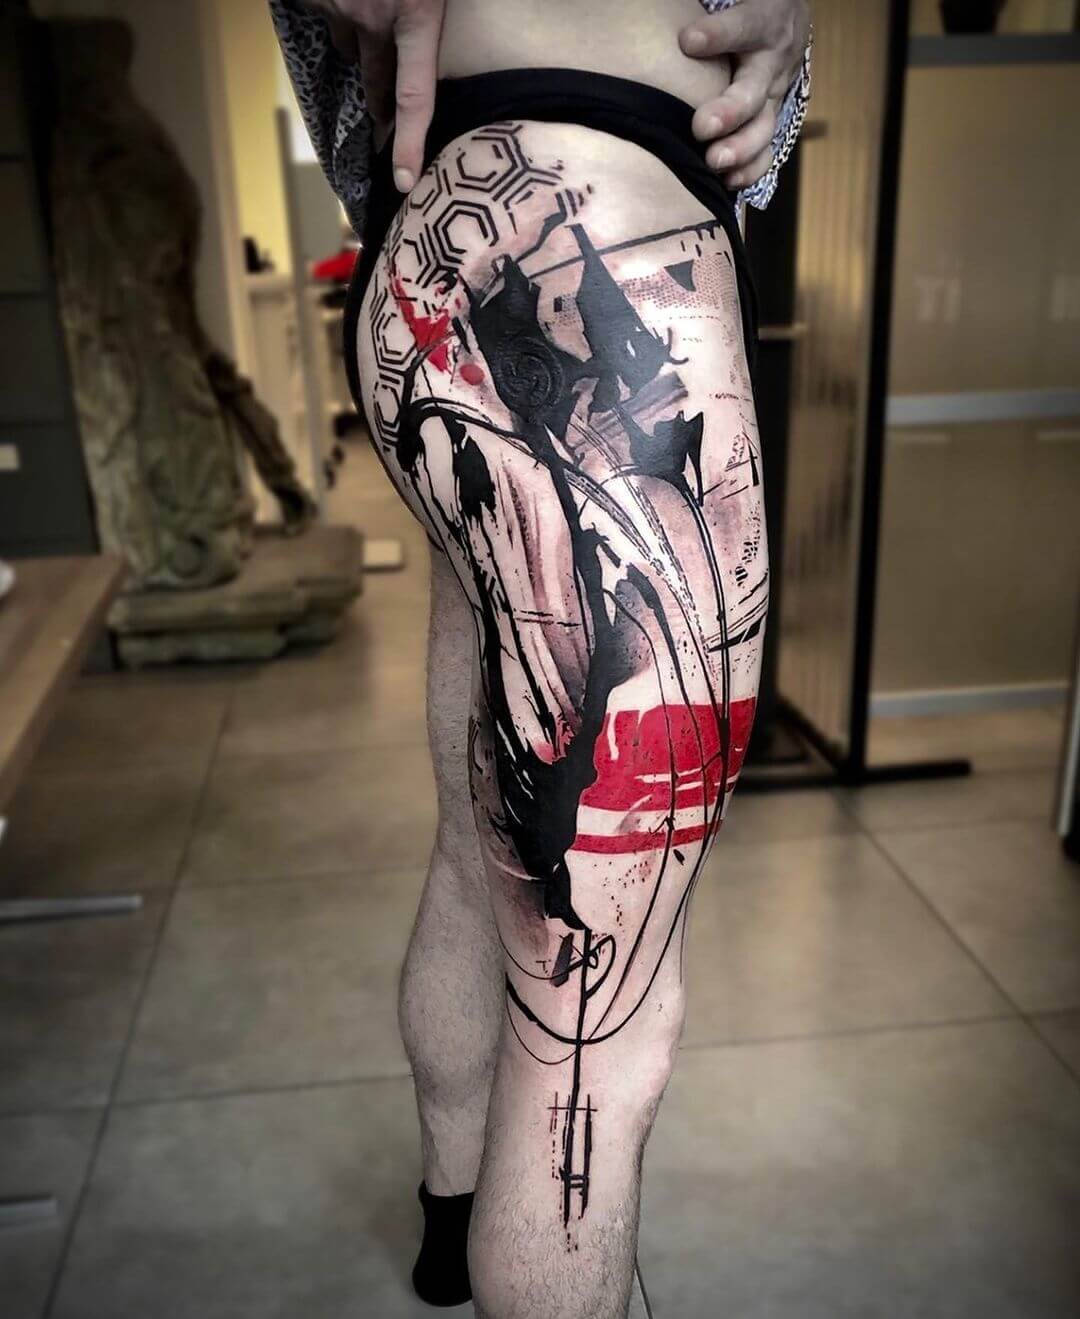 trash polka tattoo on leg.